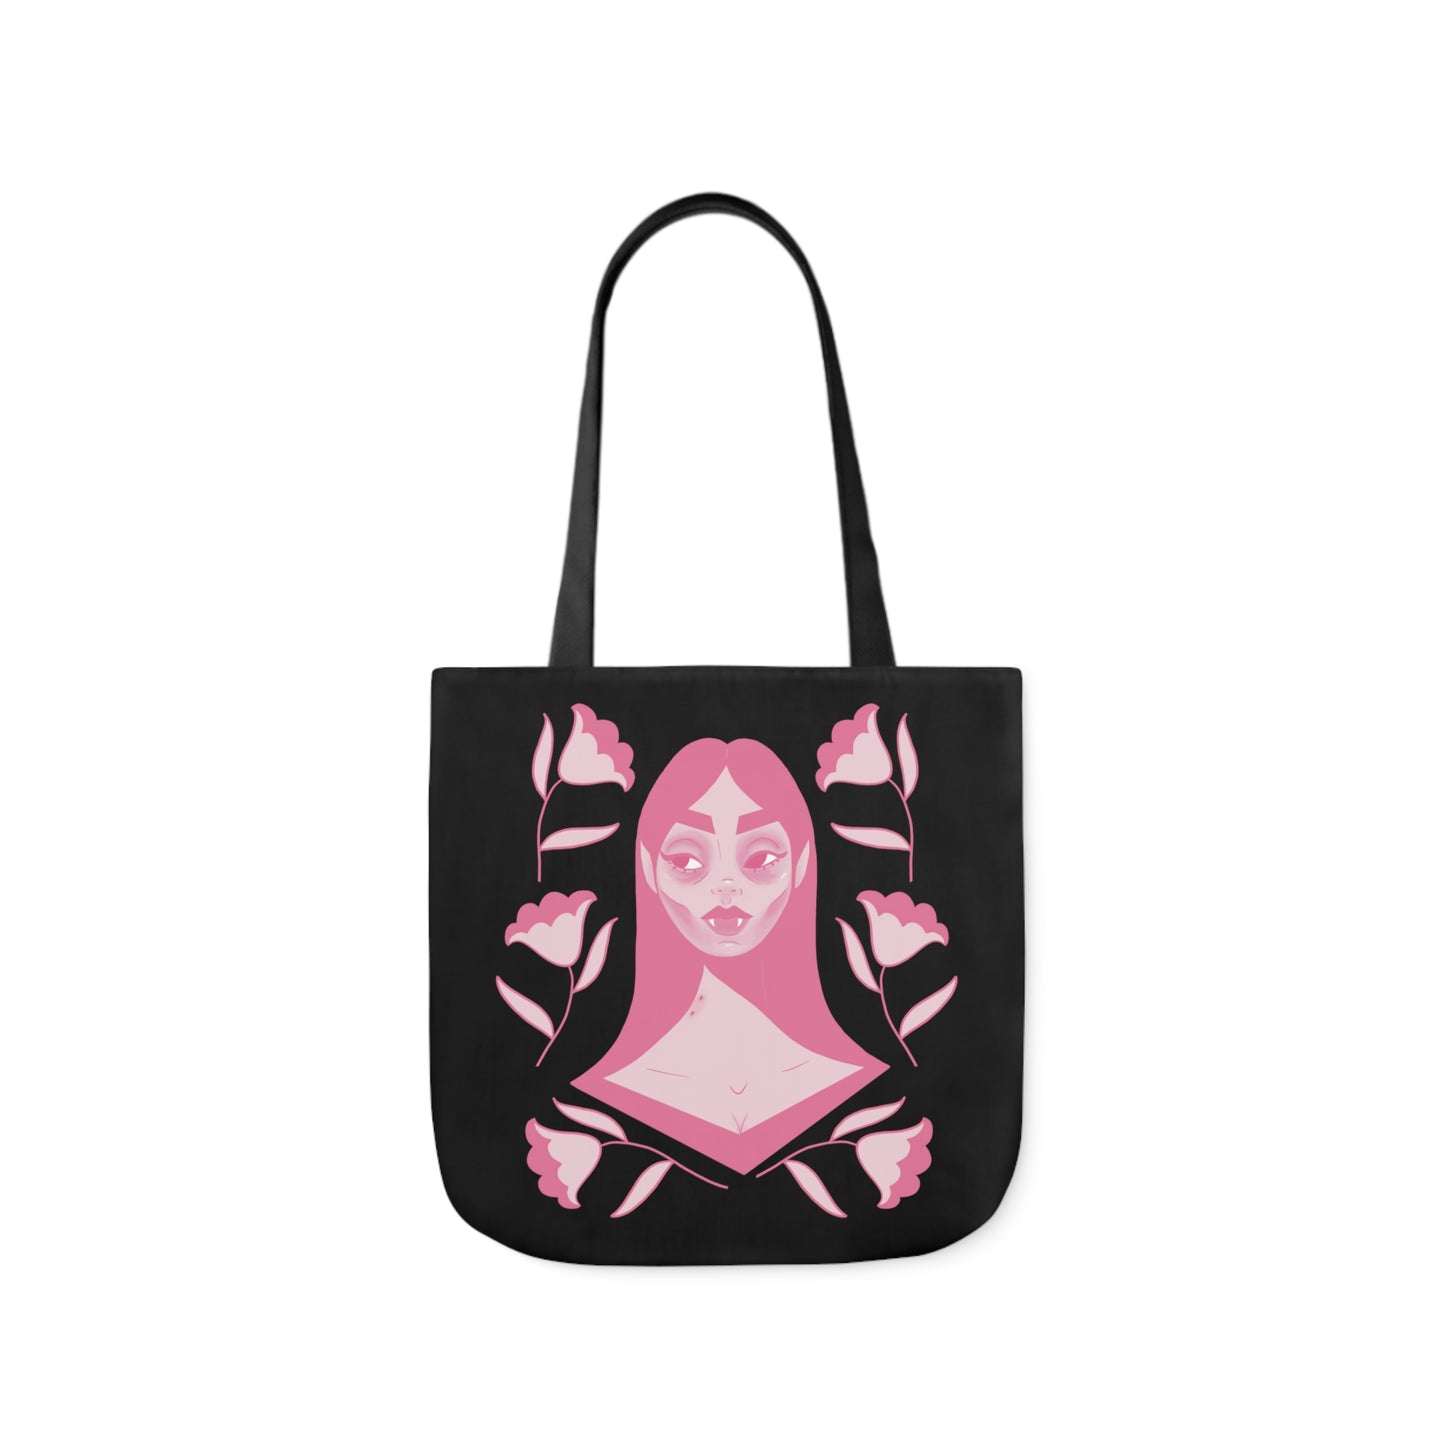 Bitten & Smitten Tote Bag / Pink Vamp Tote Bag / Pink Halloween Tote Bag / Polyester Canvas Tote Bag